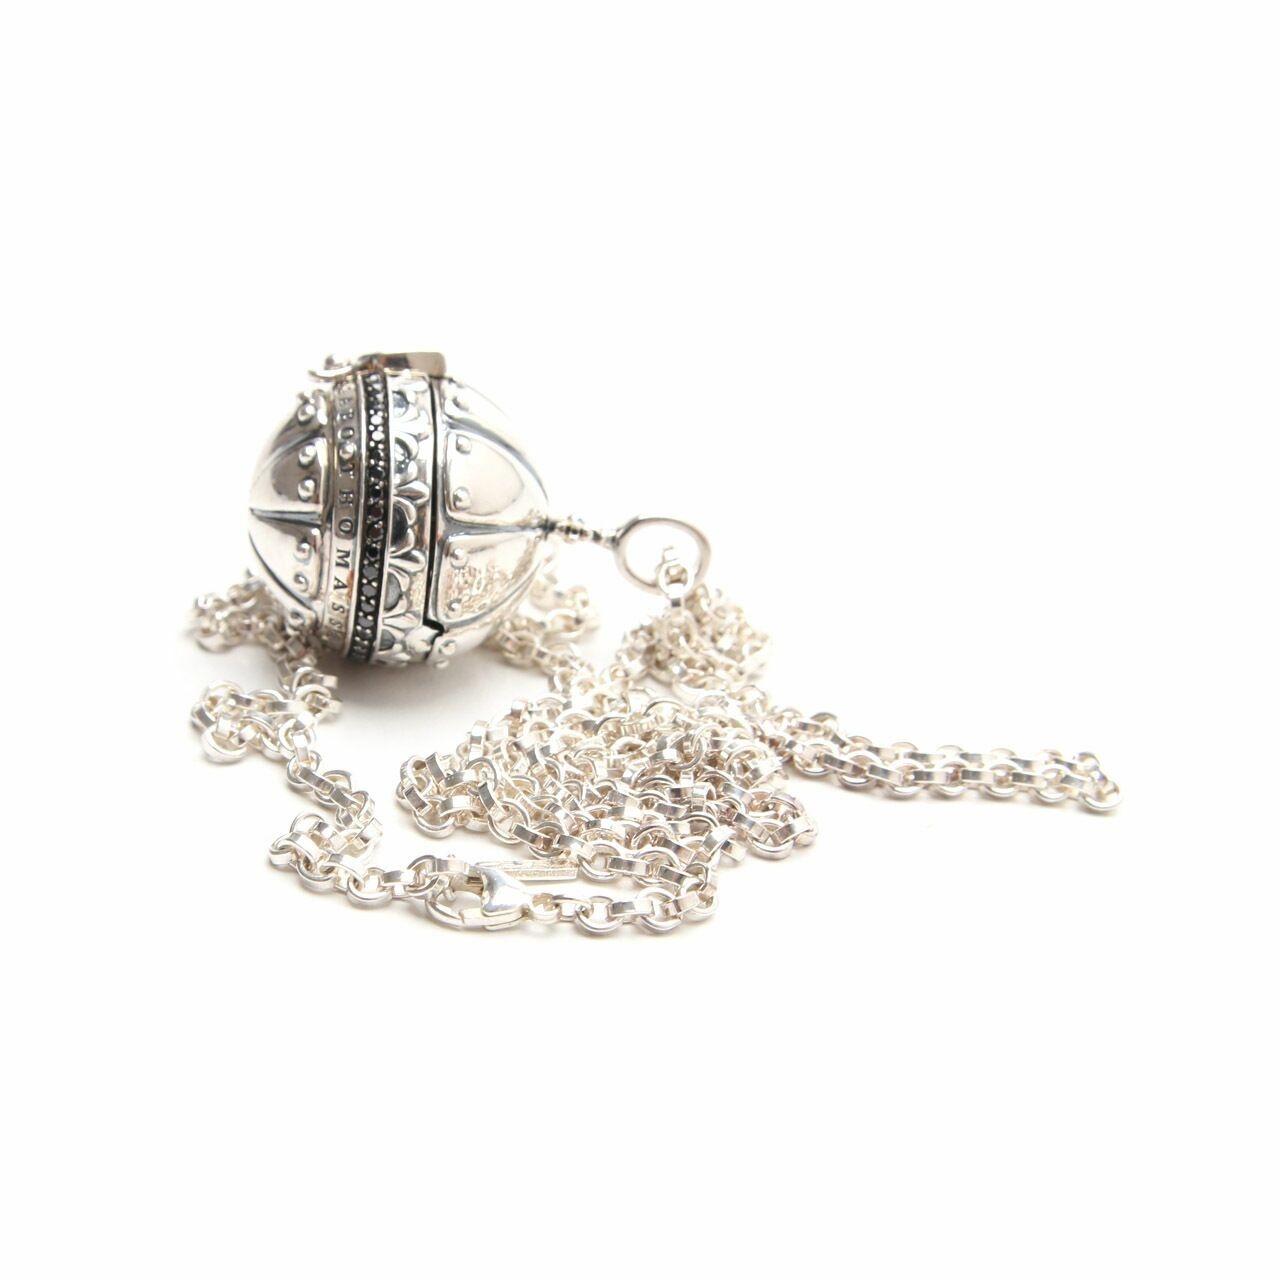 Thomas Sabo Silver Necklace Jewelry